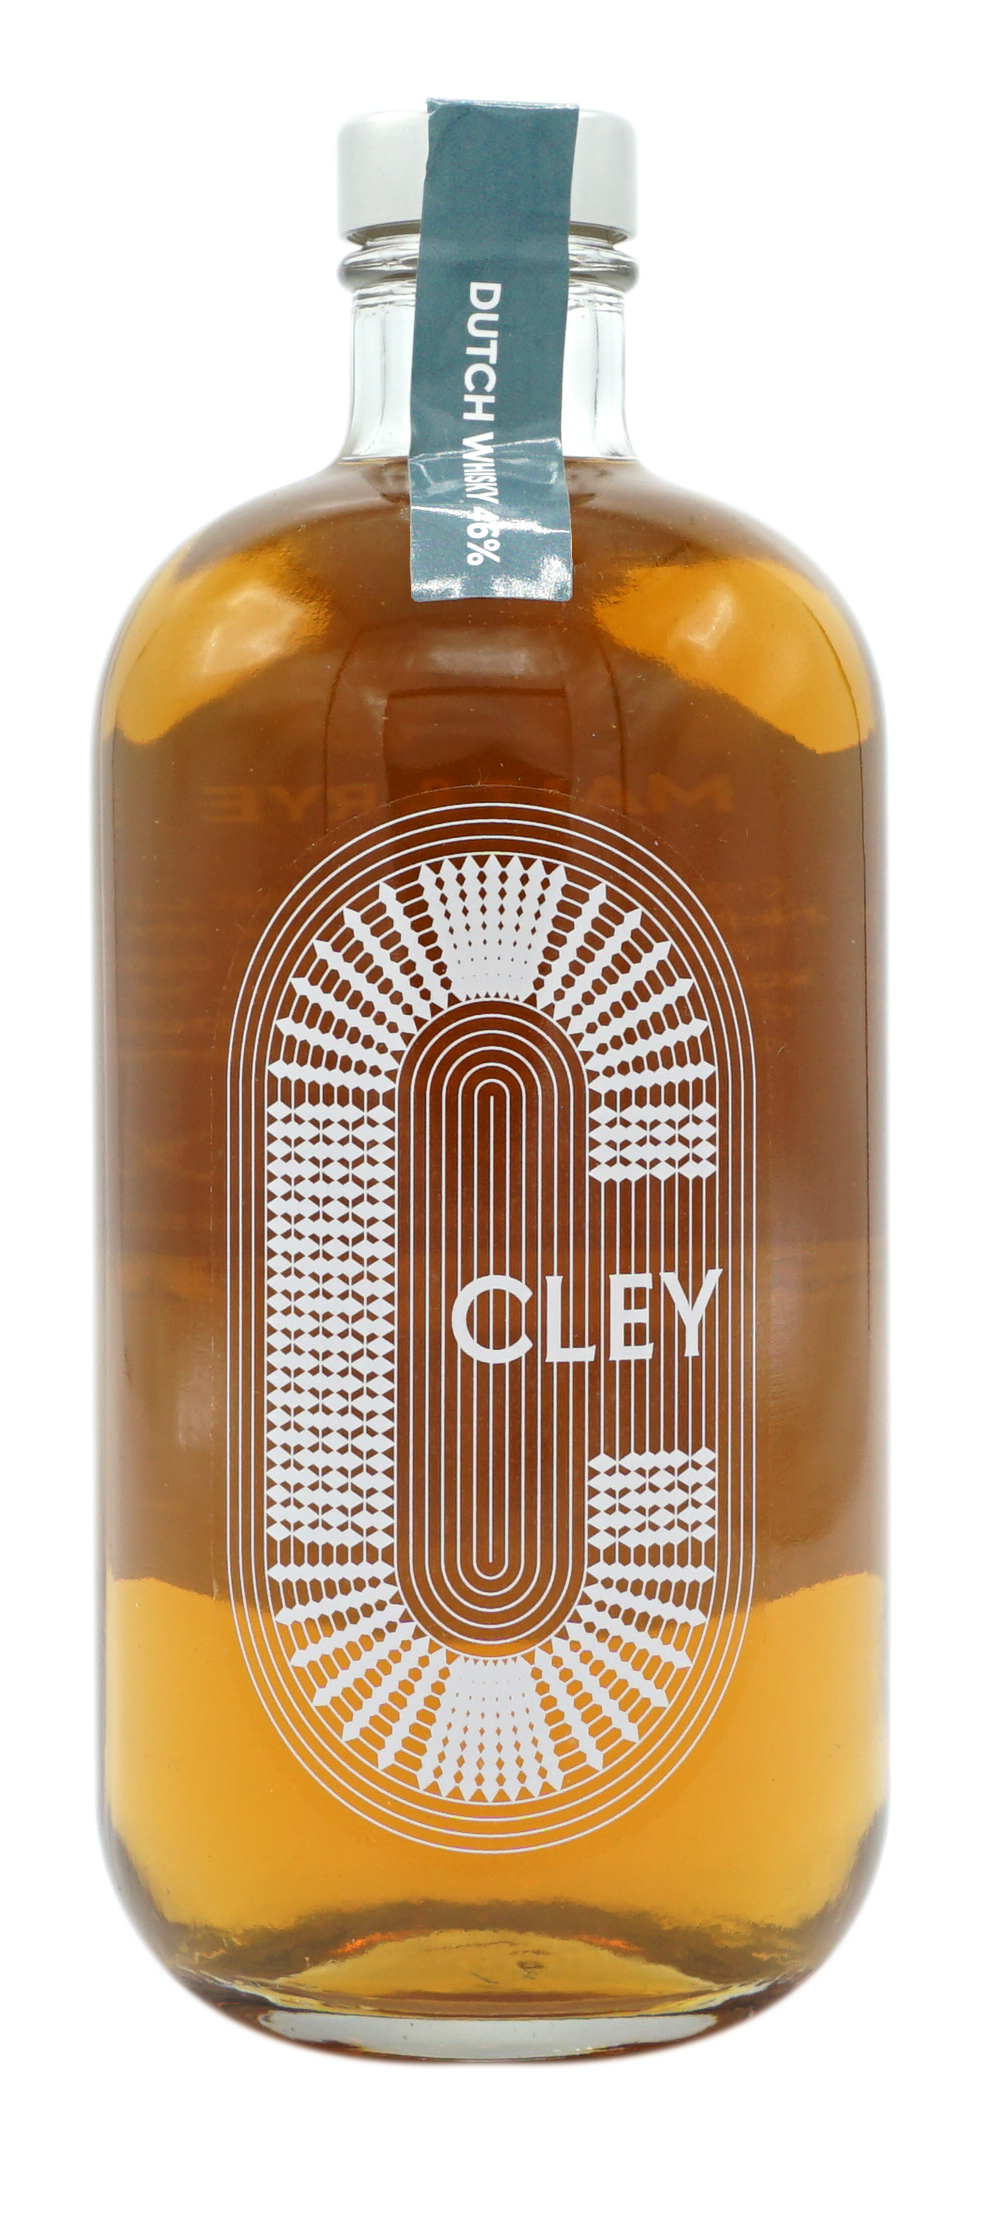 Cley Malt&Rye 46% Fles